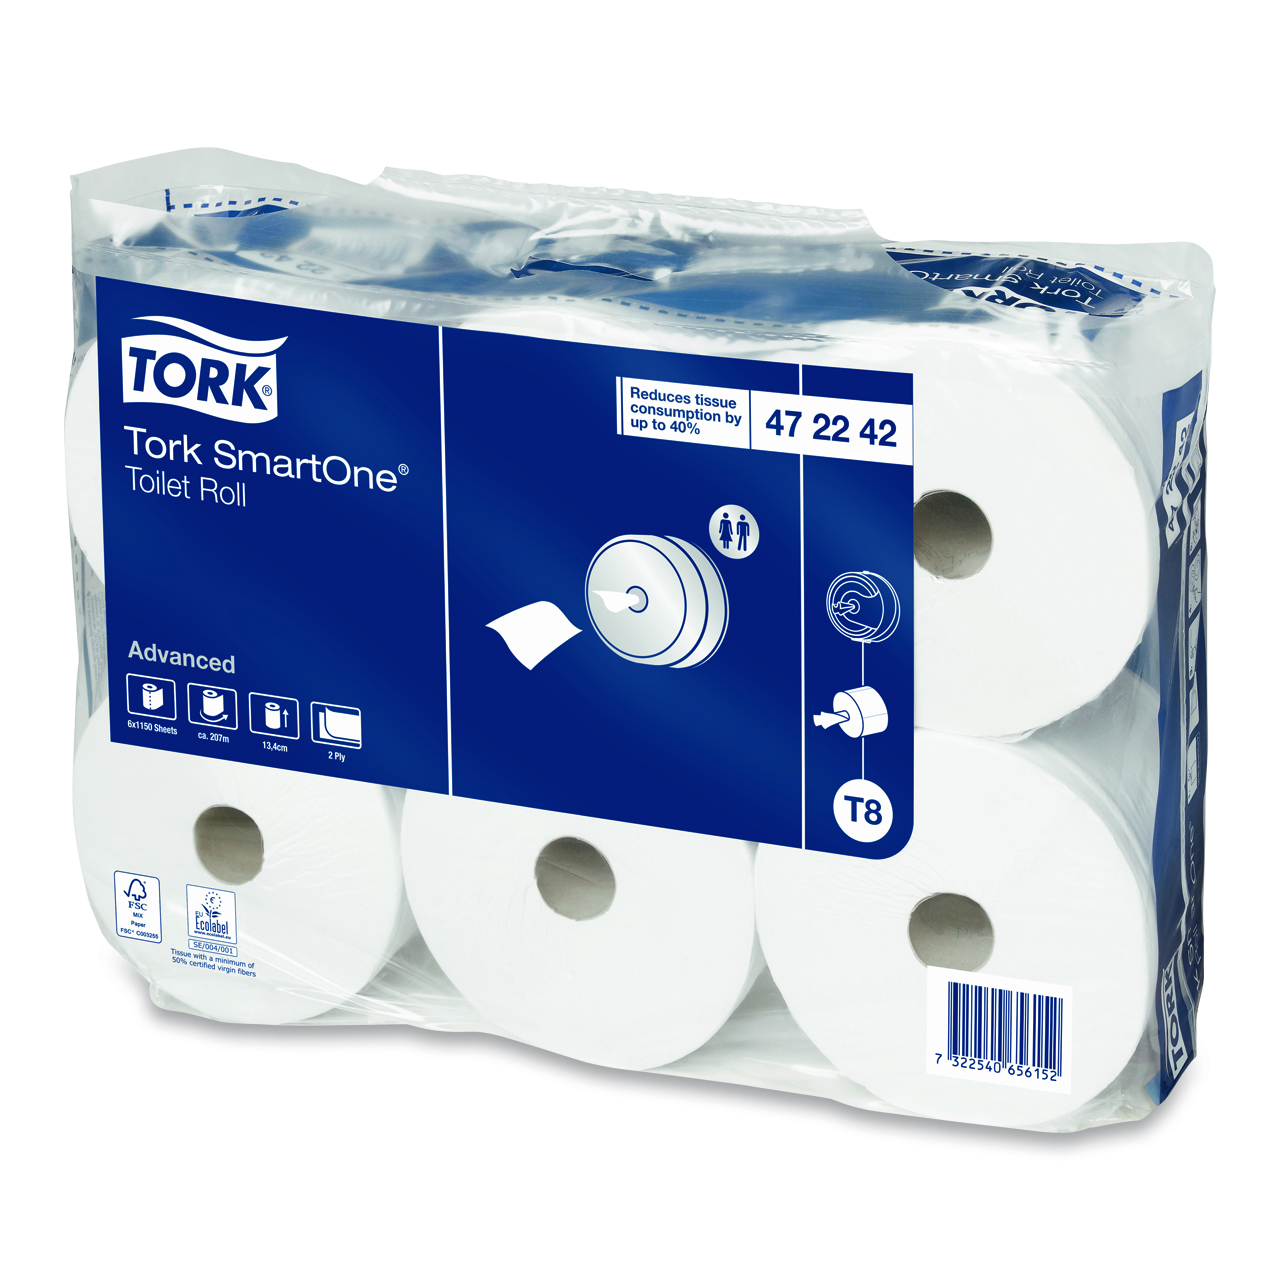 Tork SmartOne Toilettenpapier T8